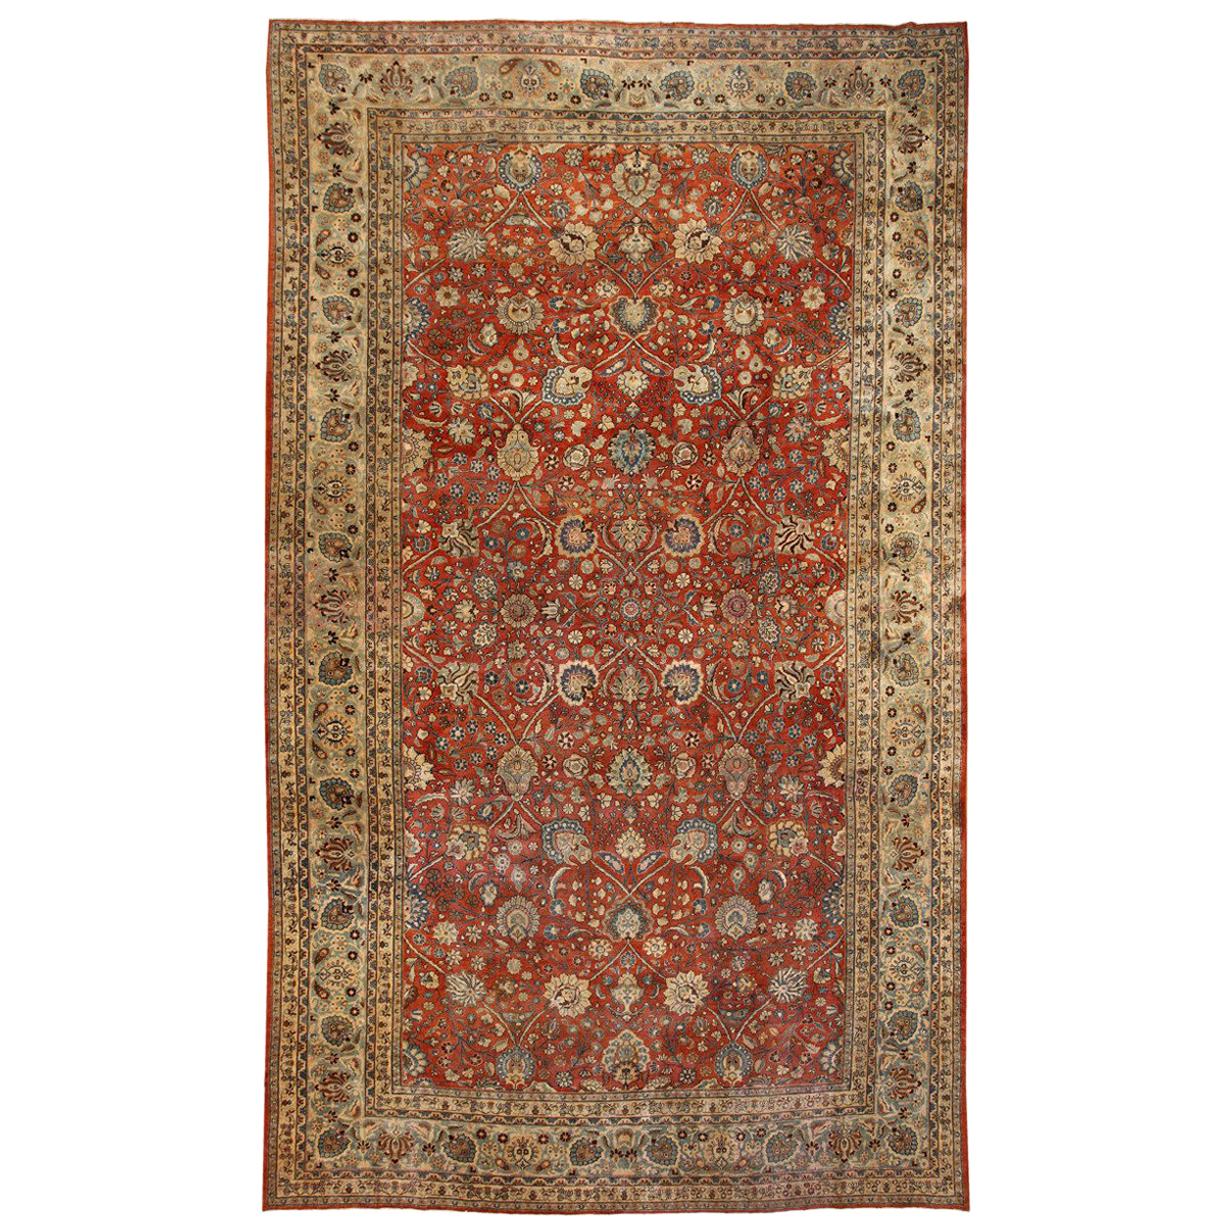 Antiker persischer Täbris-Teppich. Größe: 11 Fuß 2 Zoll x 18 Fuß 6 Zoll